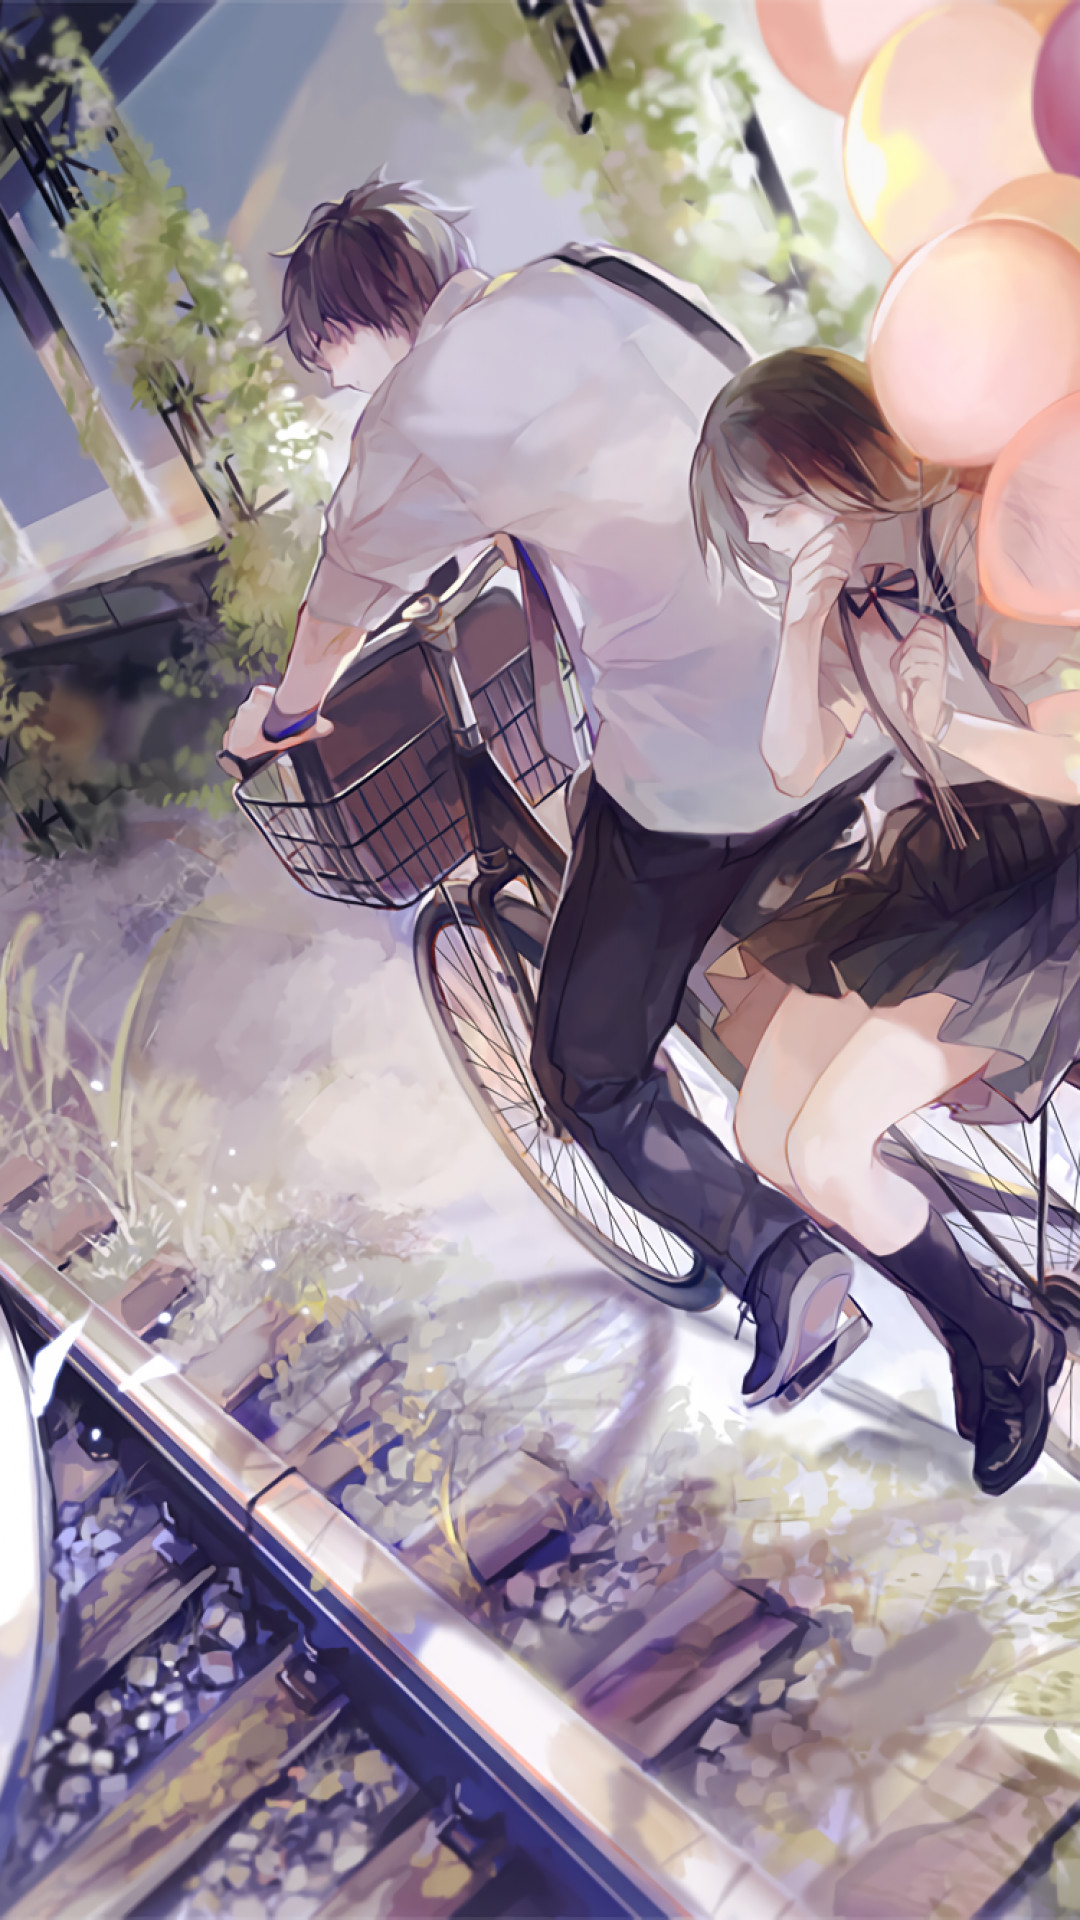 1080x1920 Anime Couple, Romance, Train Station, Bicycle, Balloons, School Uniform